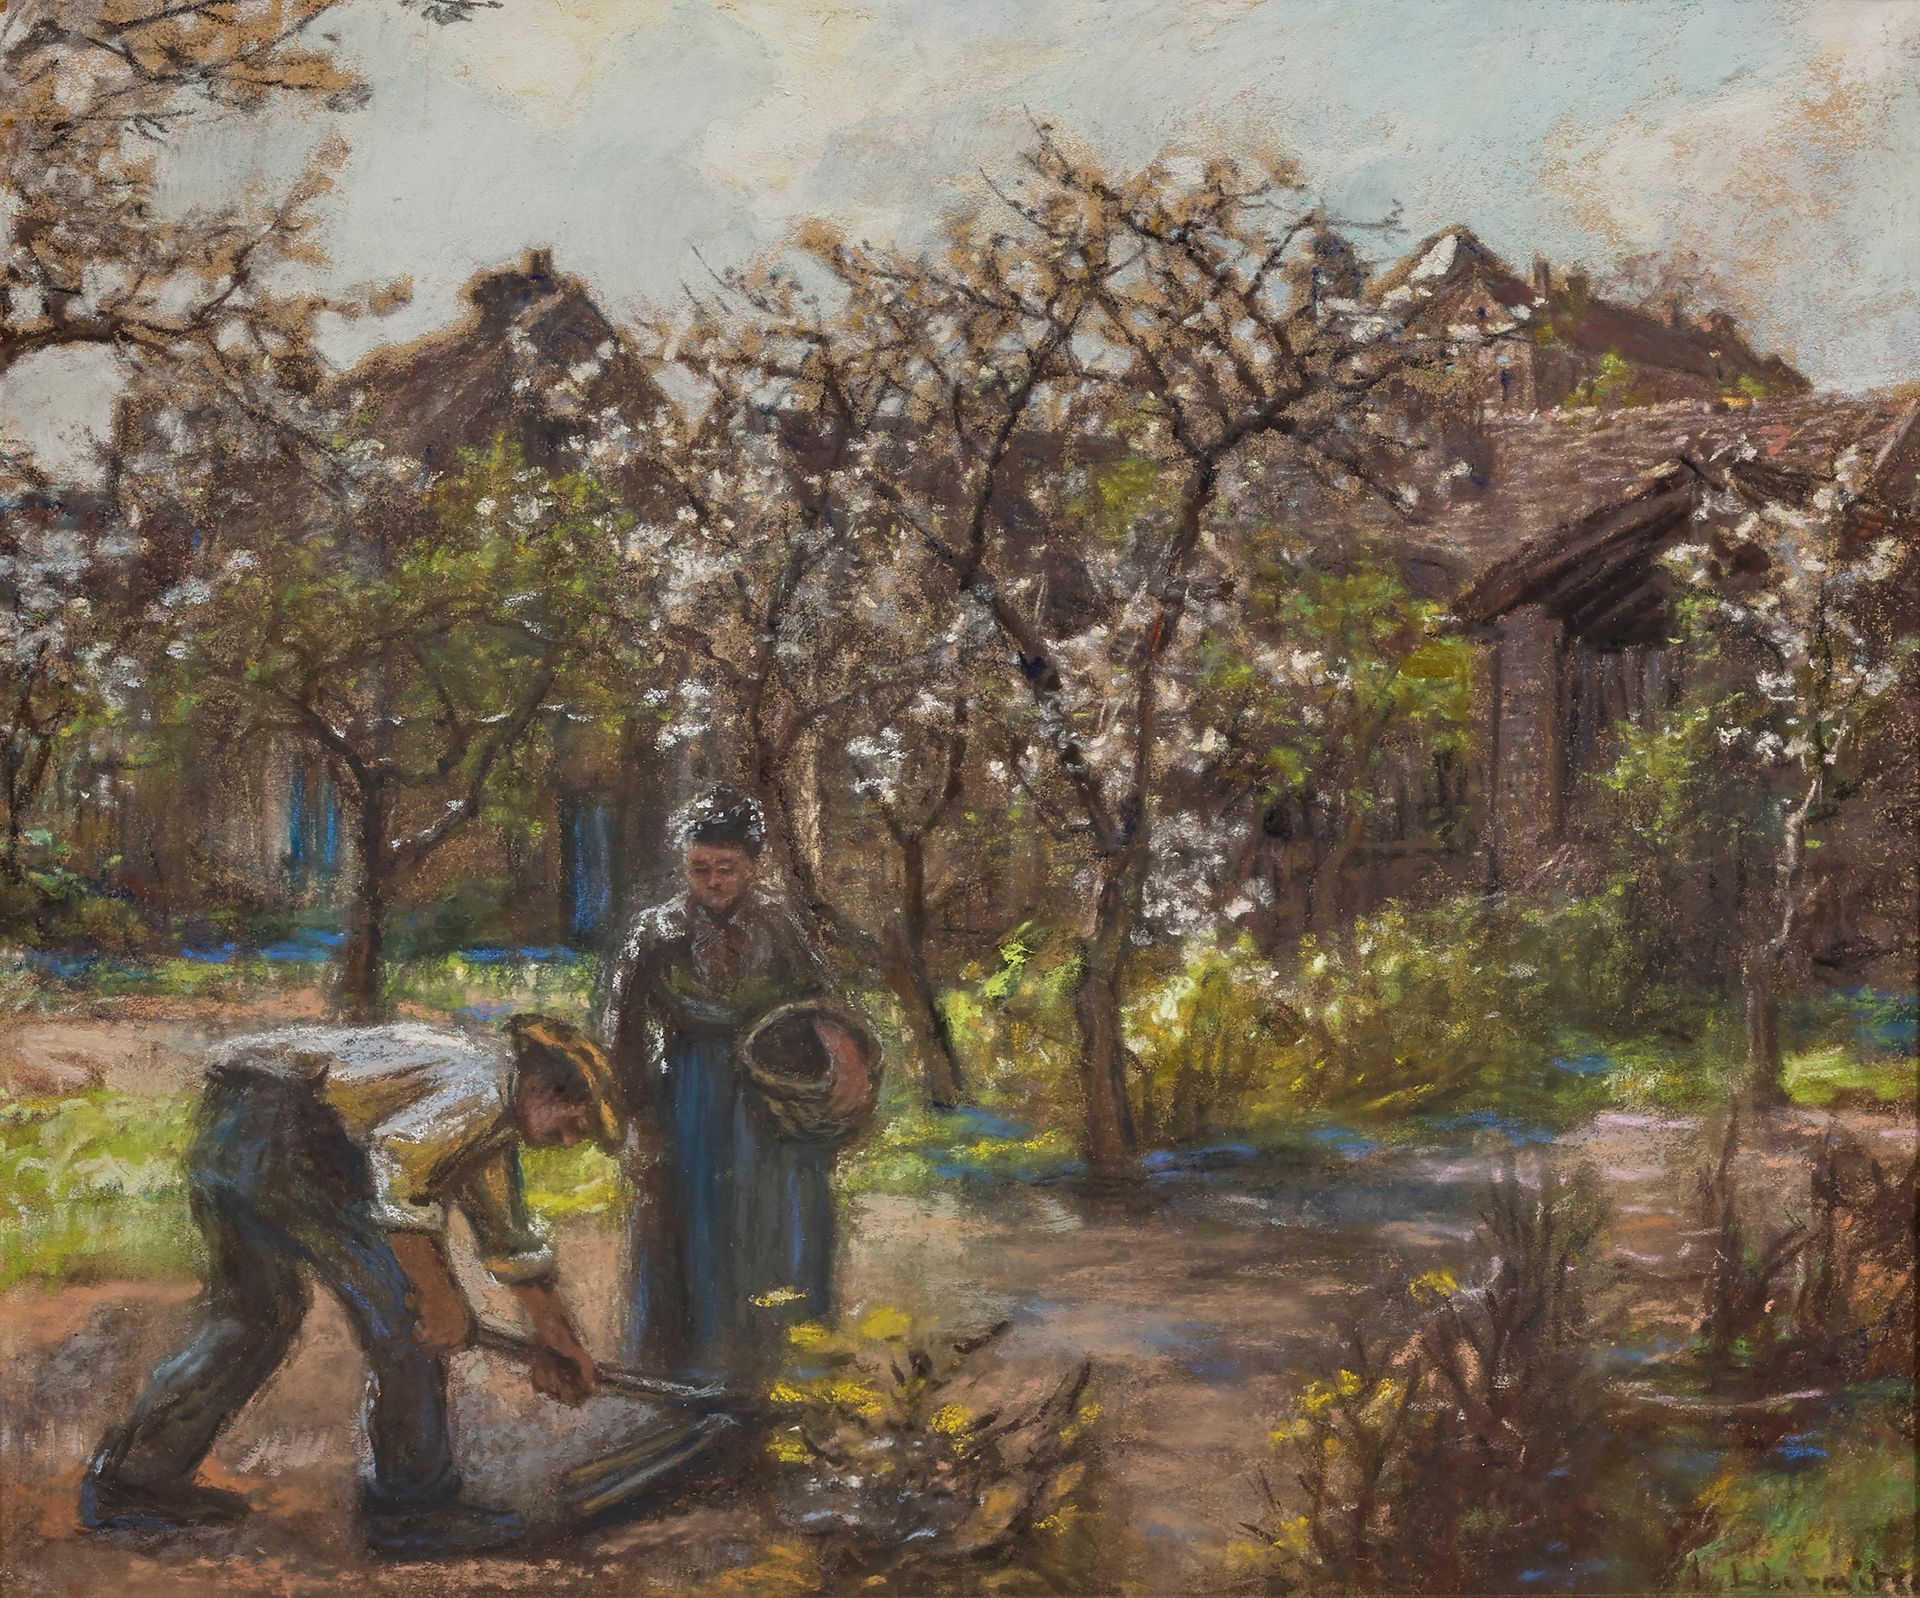 Léon Augustin LHERMITTE (1844-1925) 


马铃薯种植园



纸上粉笔画，右下角有签名



32 x 39 厘米




&hellip;